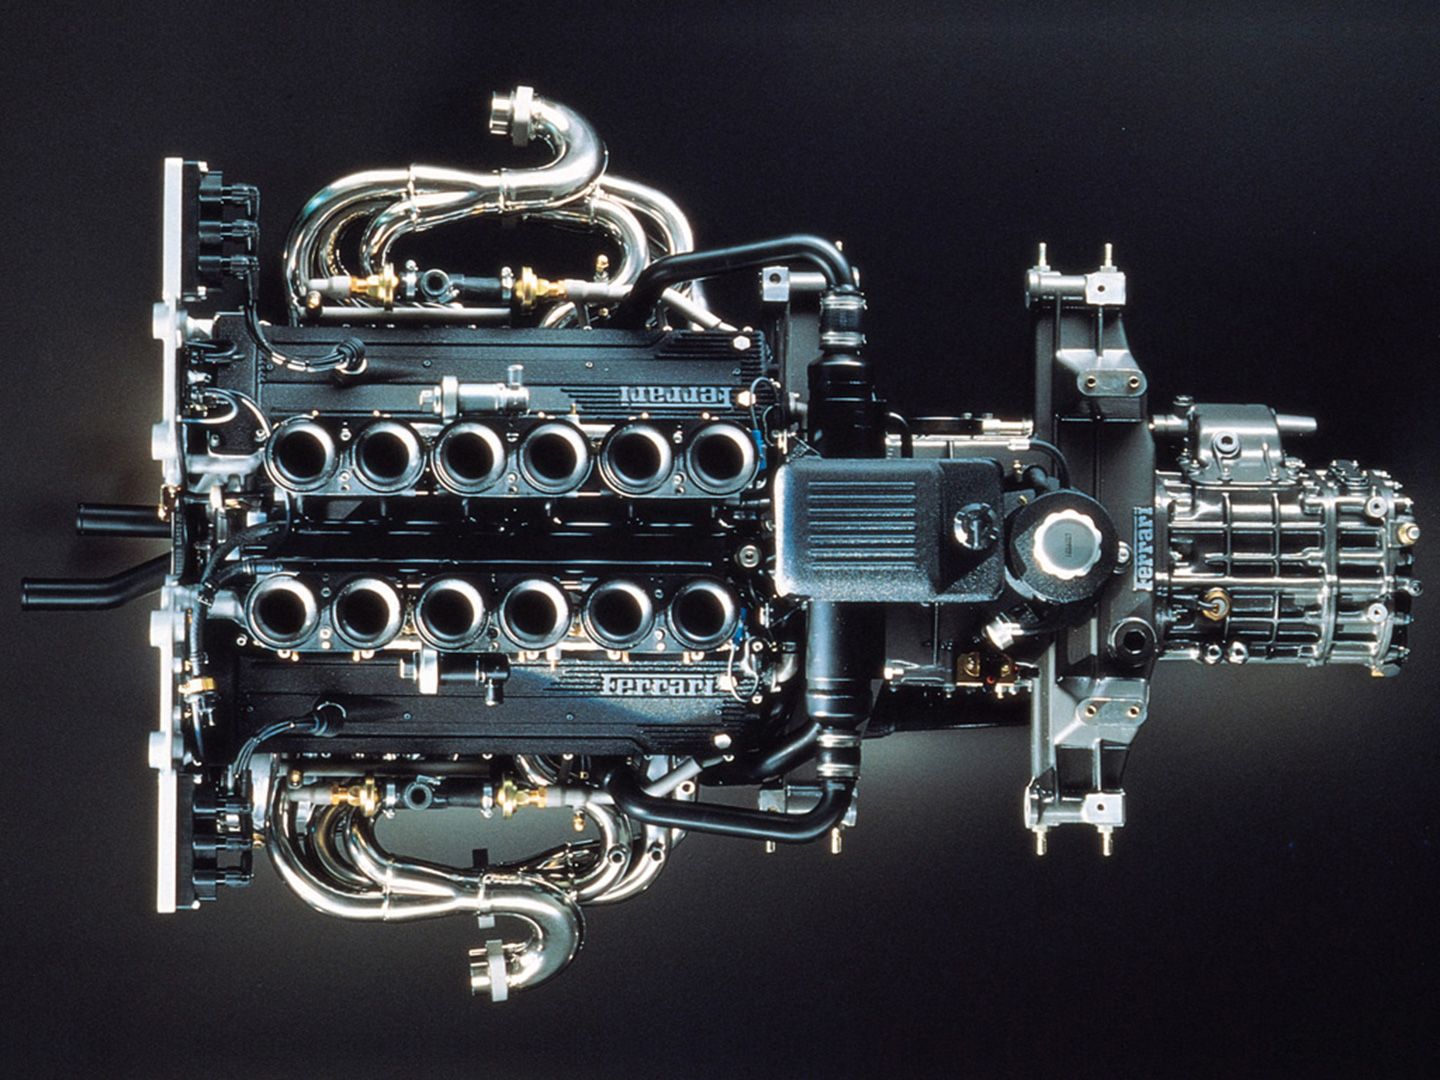 Ferrari F50 engine, dimly lit, plain background, from above